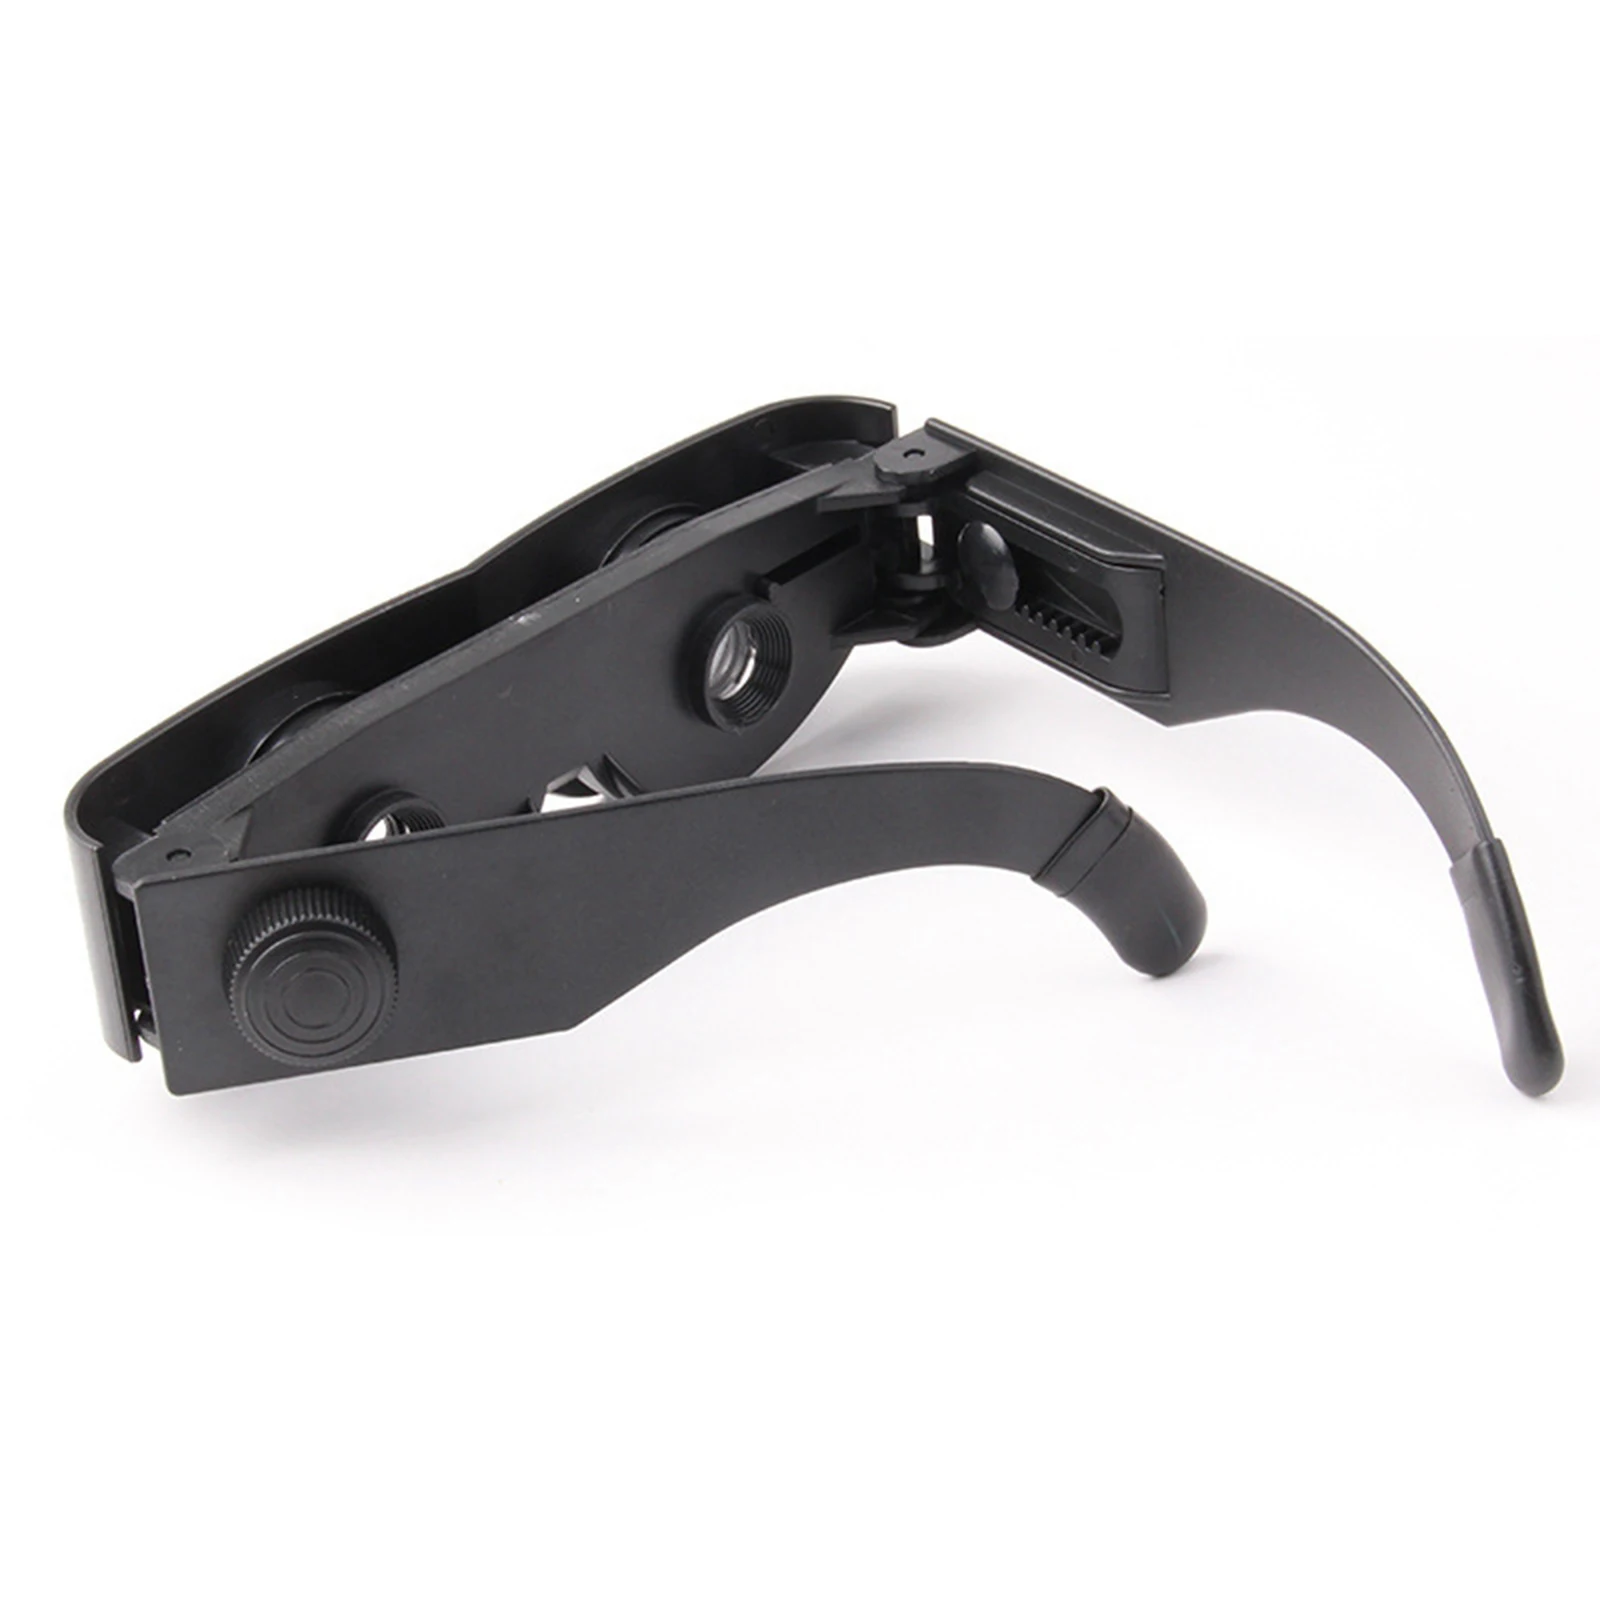 Headband Magnifier Glasses, Magnifier Hands-Free Fishing Telescope, Adjustable Focus